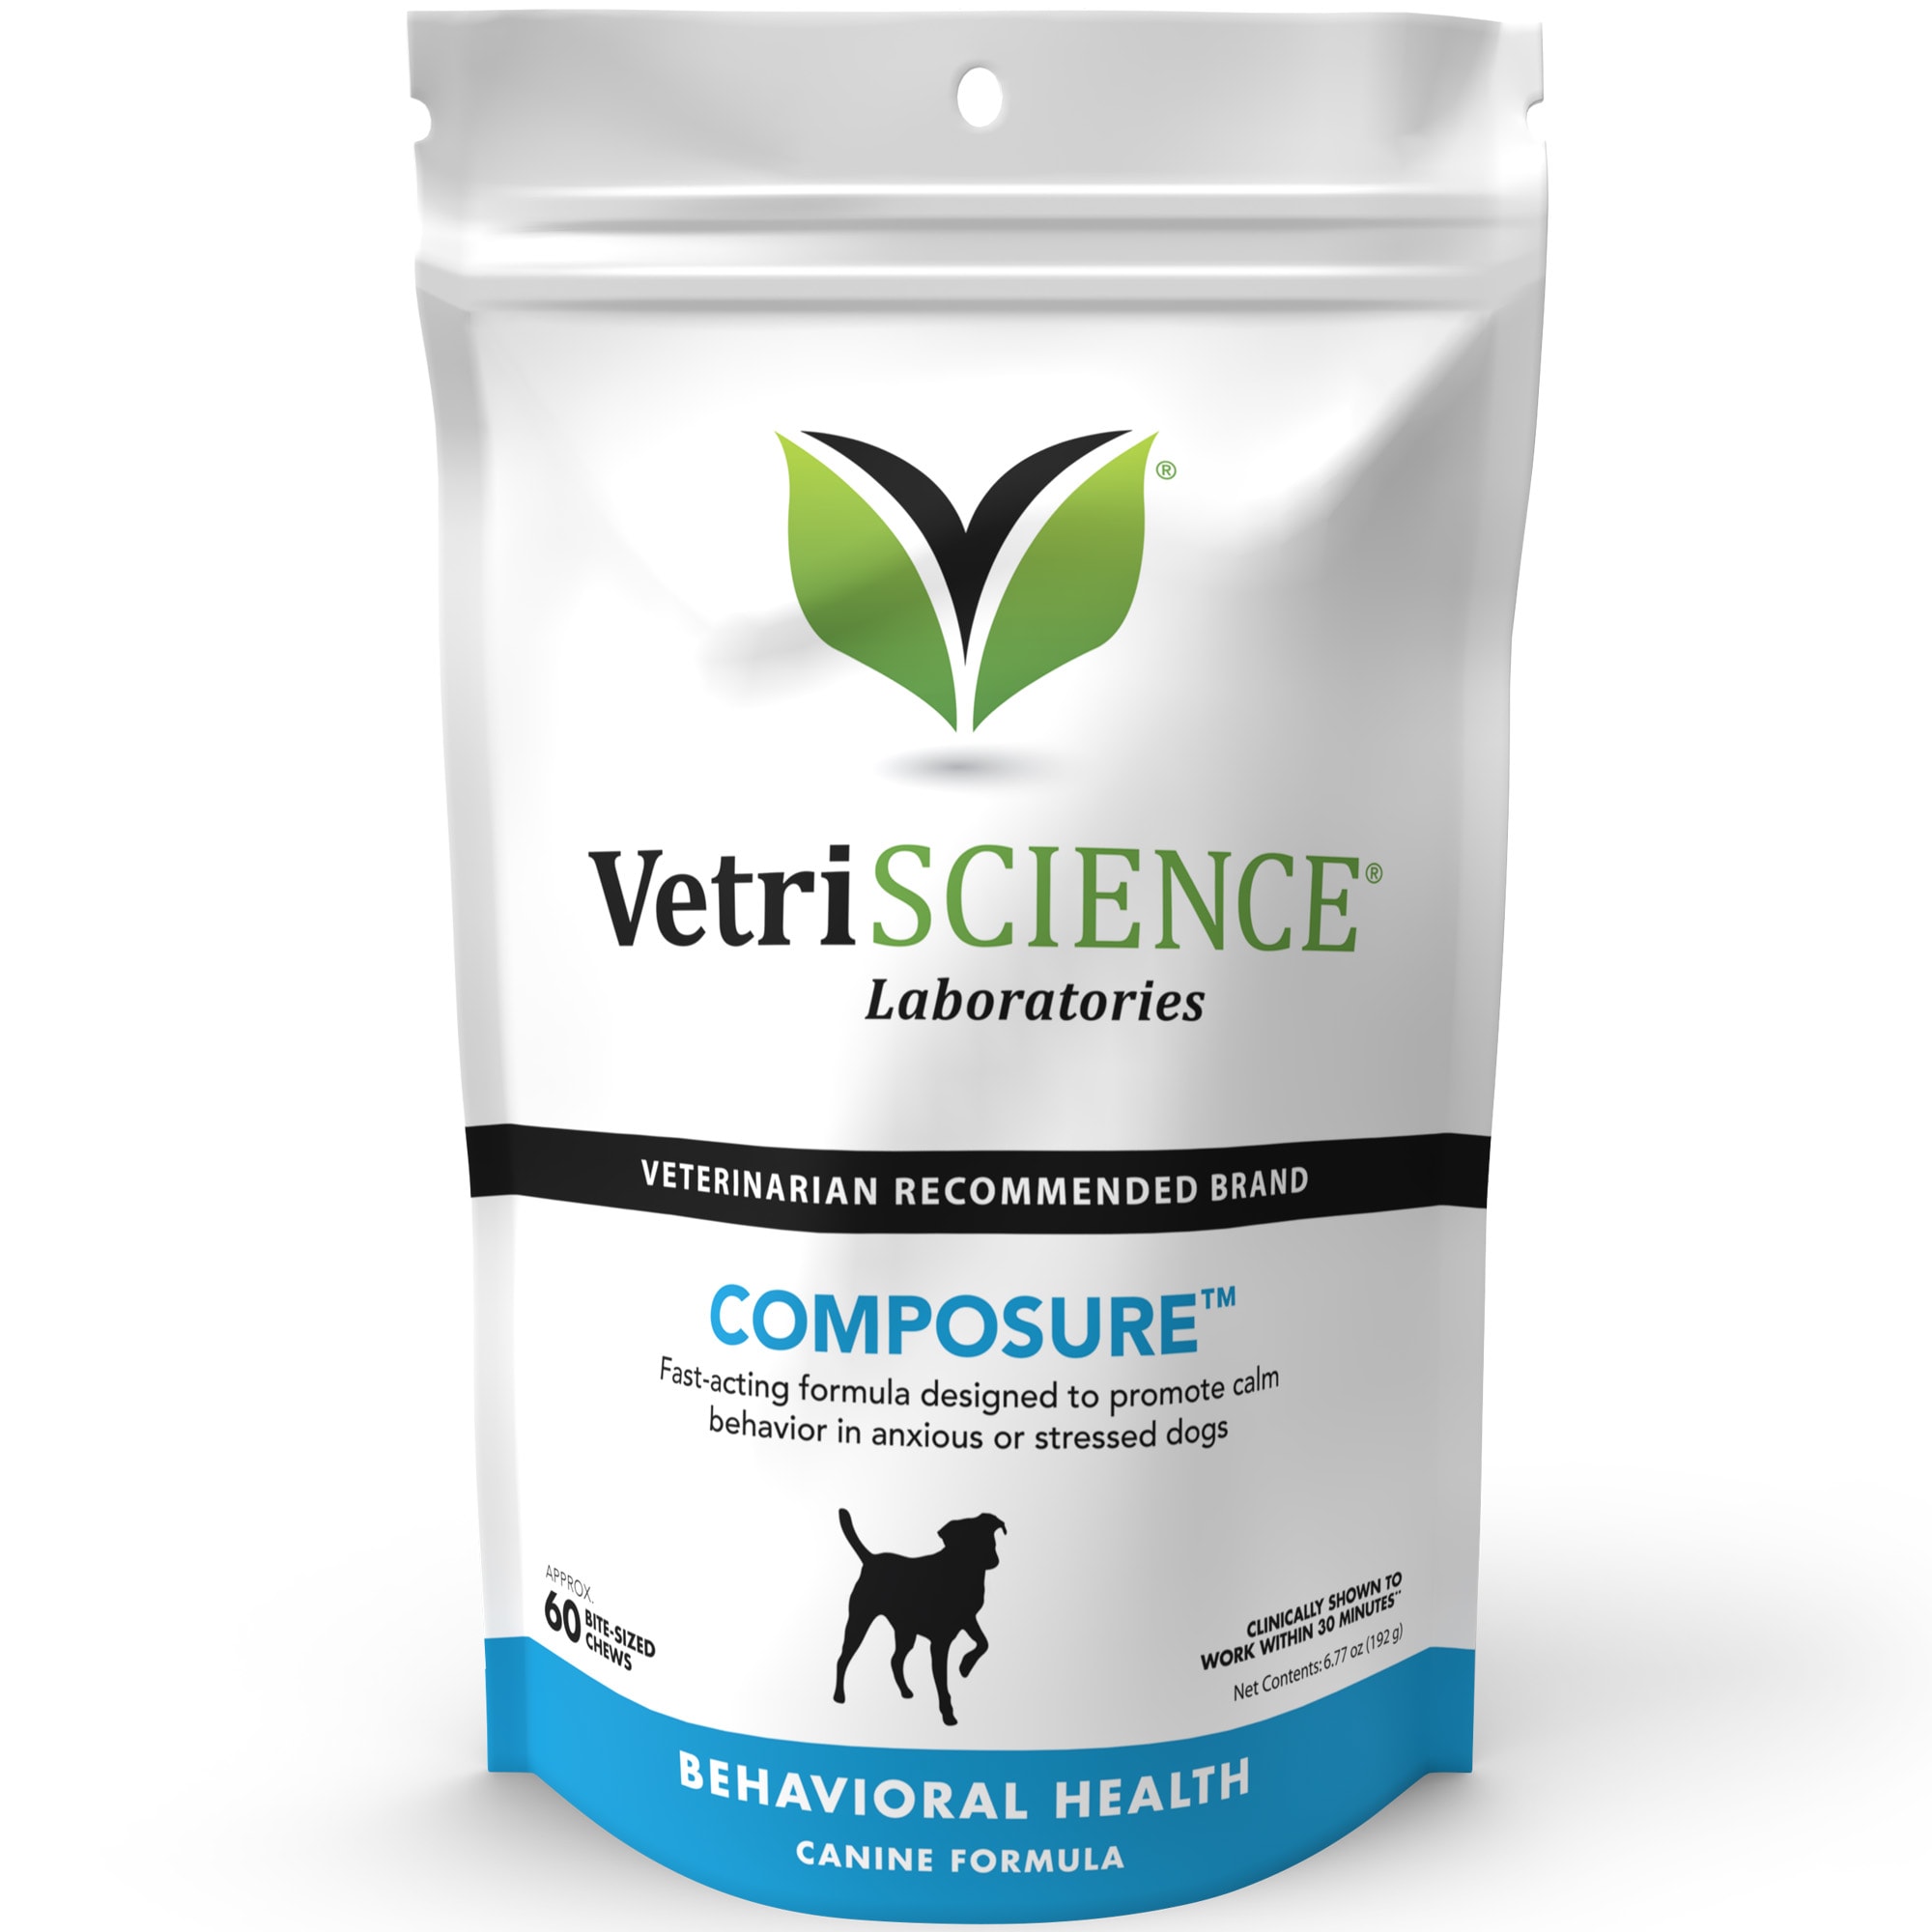 Photos - Dog Medicines & Vitamins VetriSCIENCE Composure Dog Calming Chews, Count of 60 0900780 